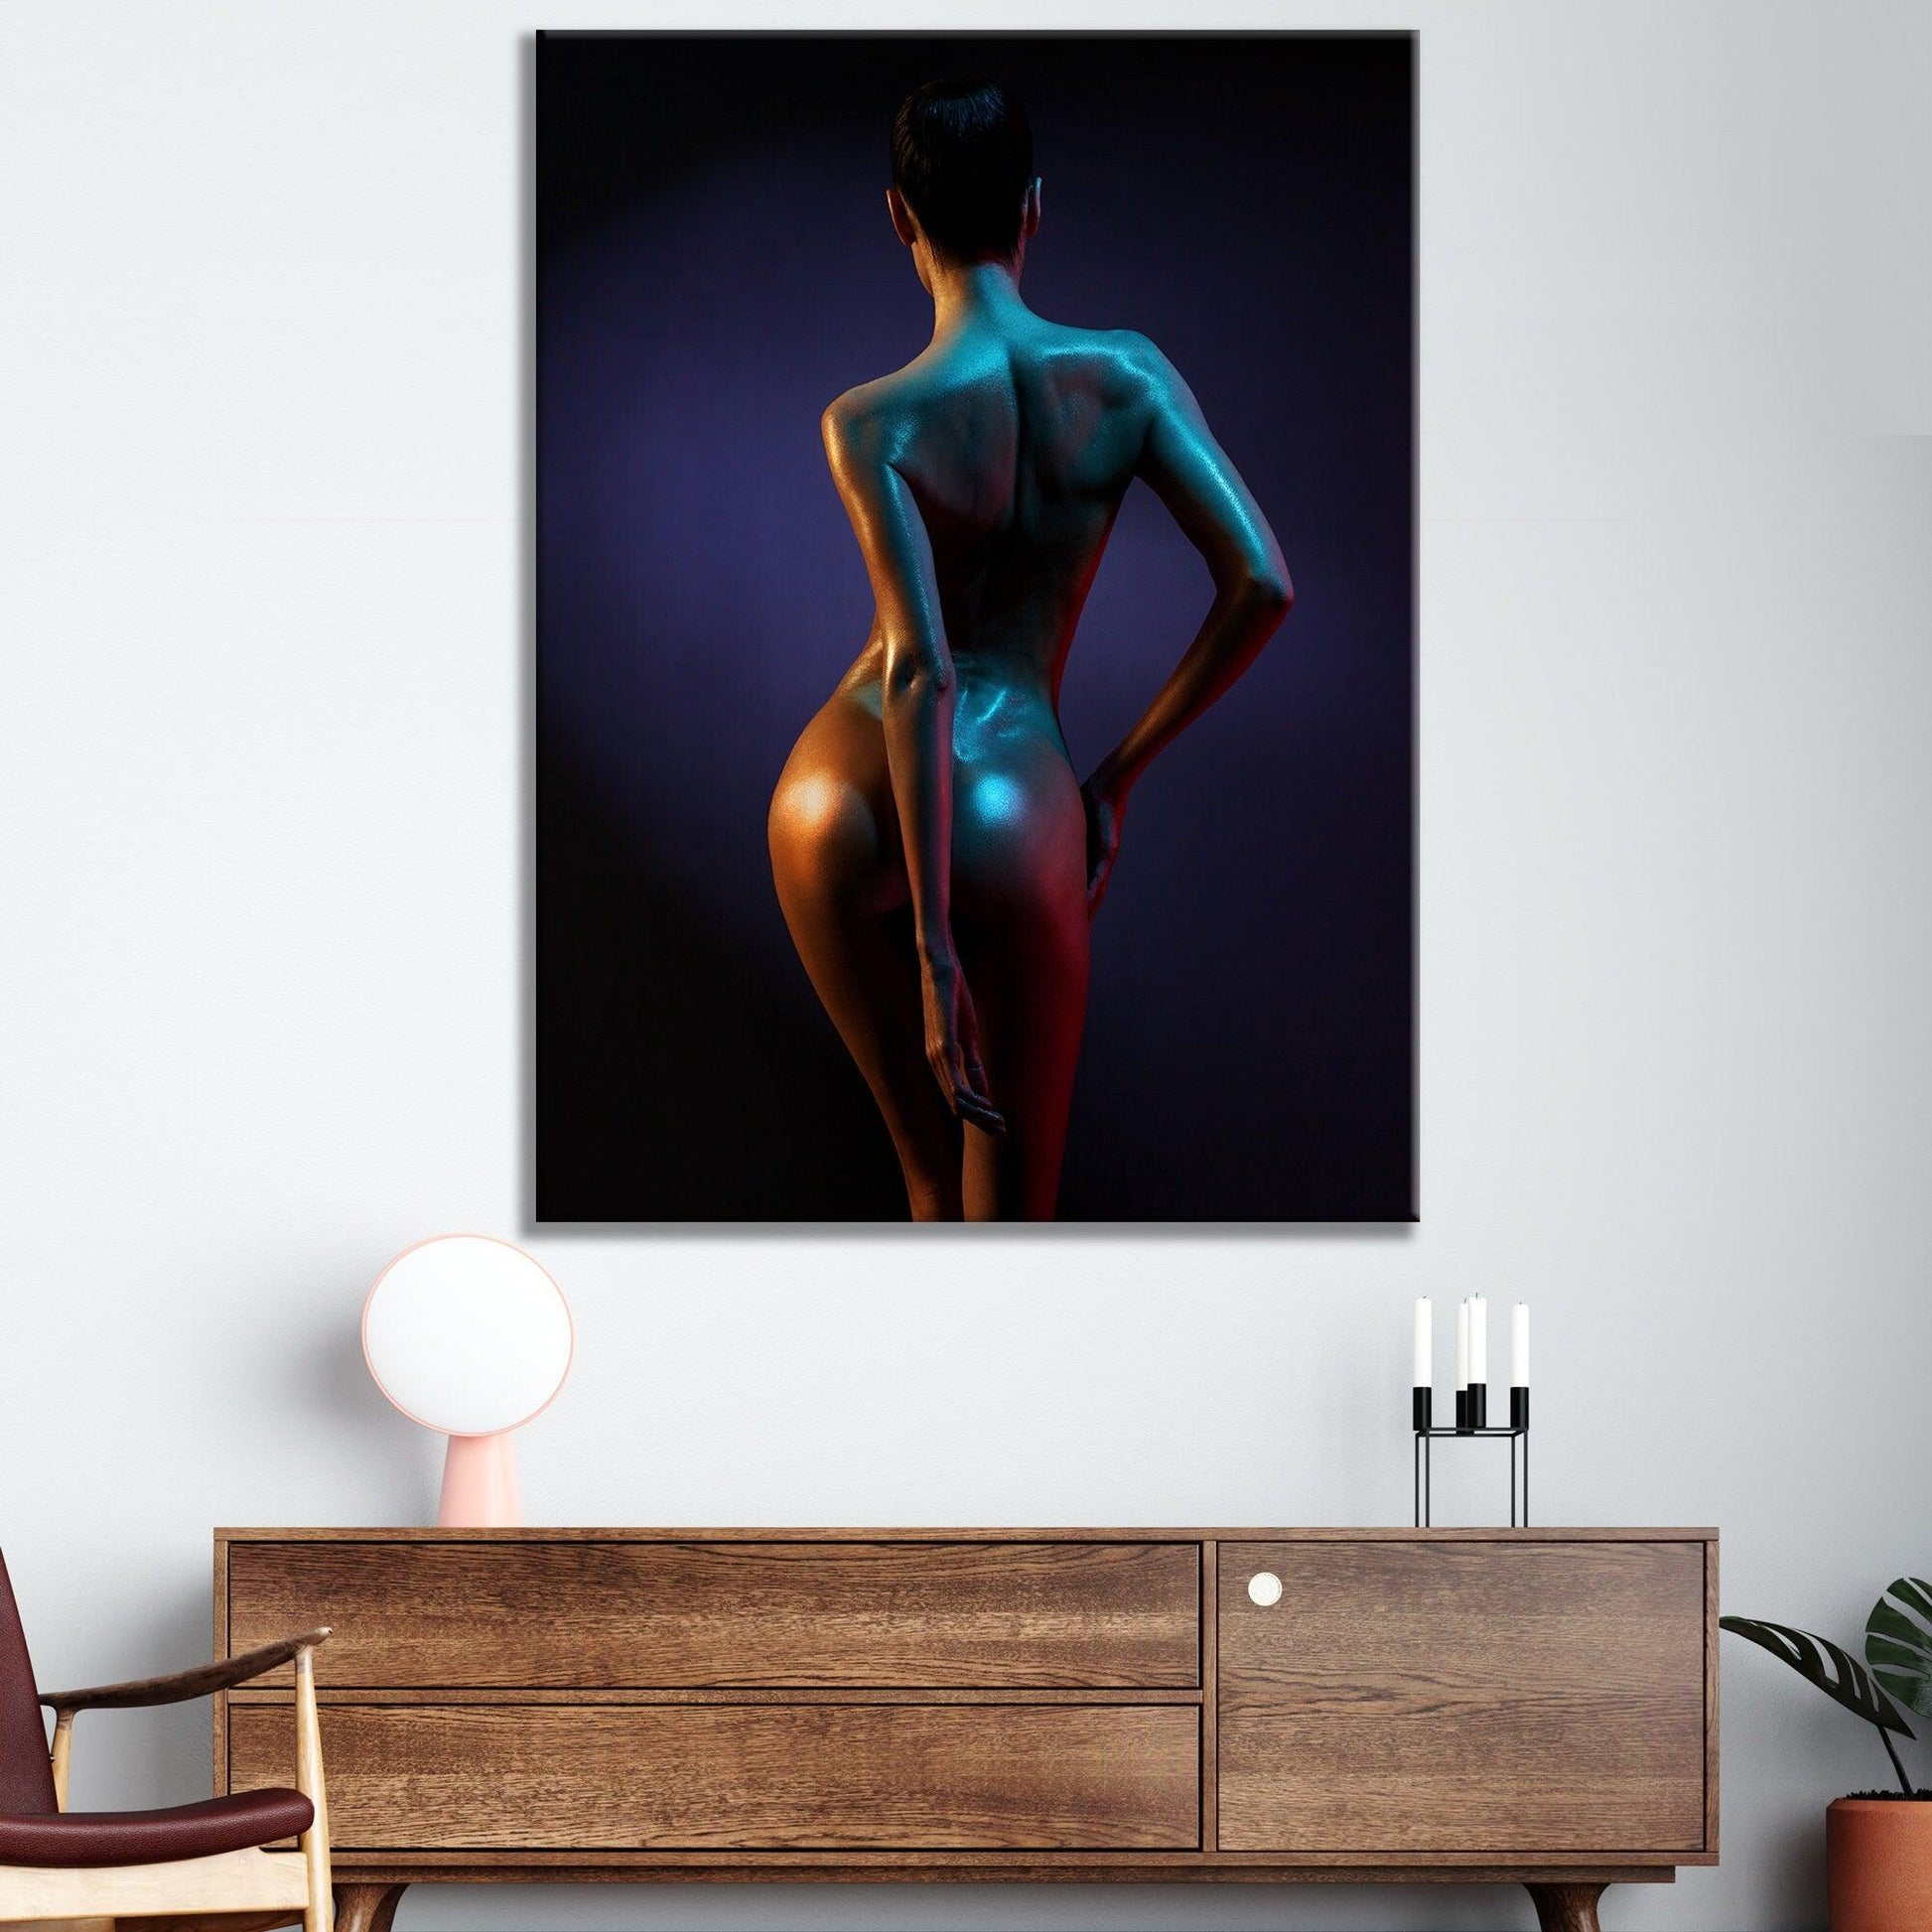 Sensual Body Art | CANVAS print, Sensual Bedroom canvas Wall art, Bedroom Abstract Art, Sexy Bedroom canvas decor, woman Canvas printing